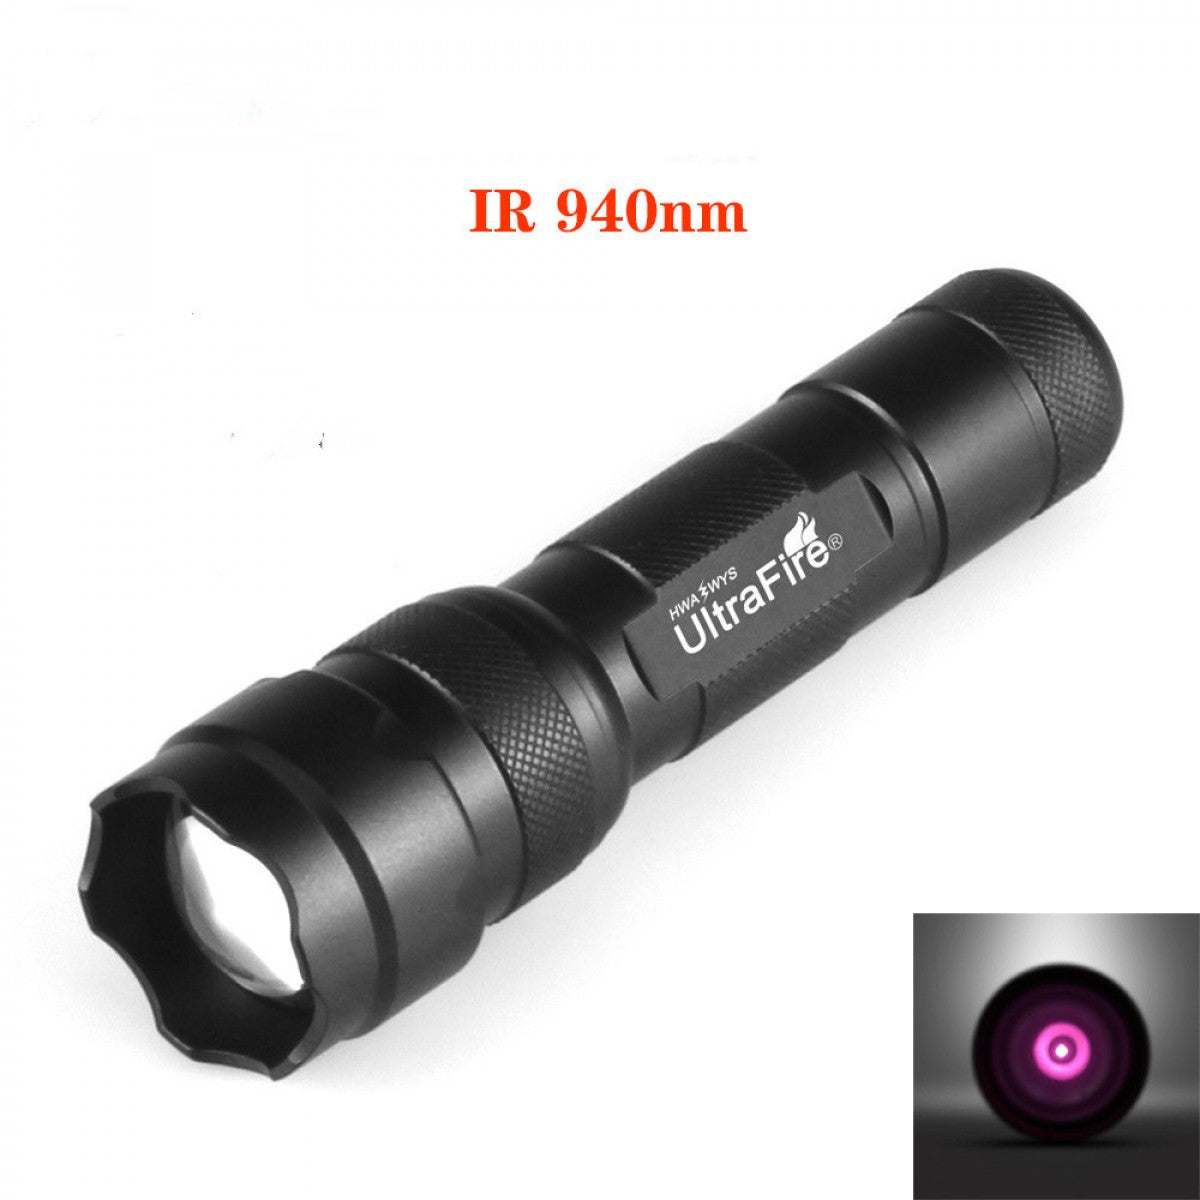 UltraFire Focusing Infrared Night Vision Flashlight 502B 10W LED Tactical Flashlight Infrared Anti-Hunting